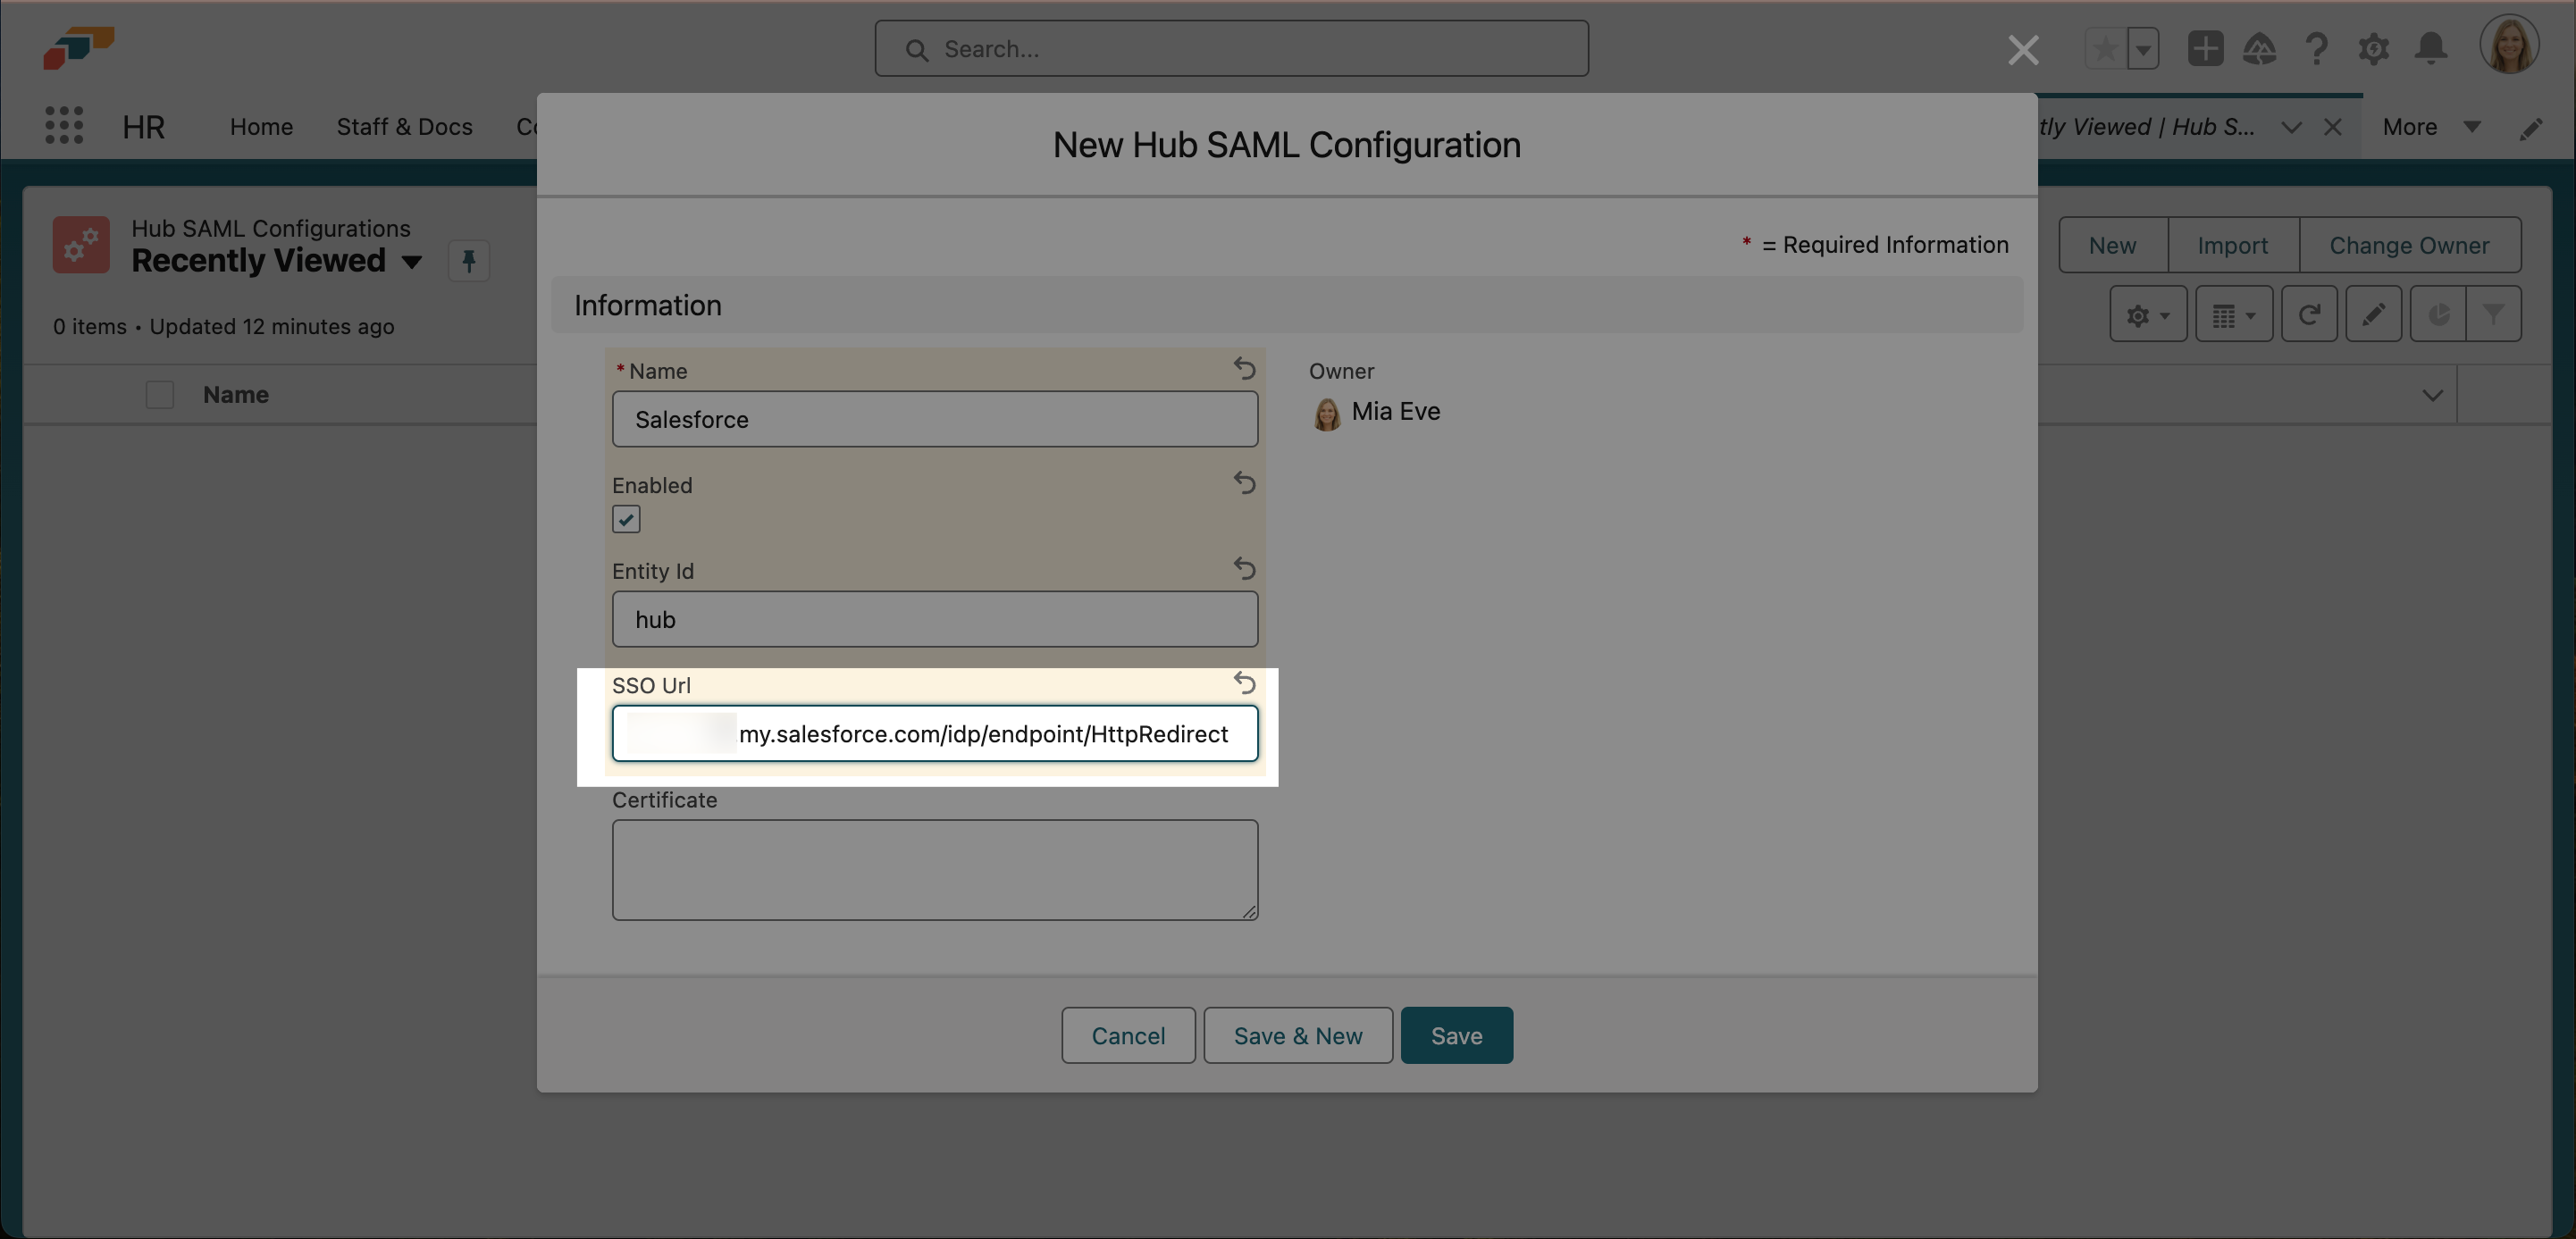 Configuring SAML for flair